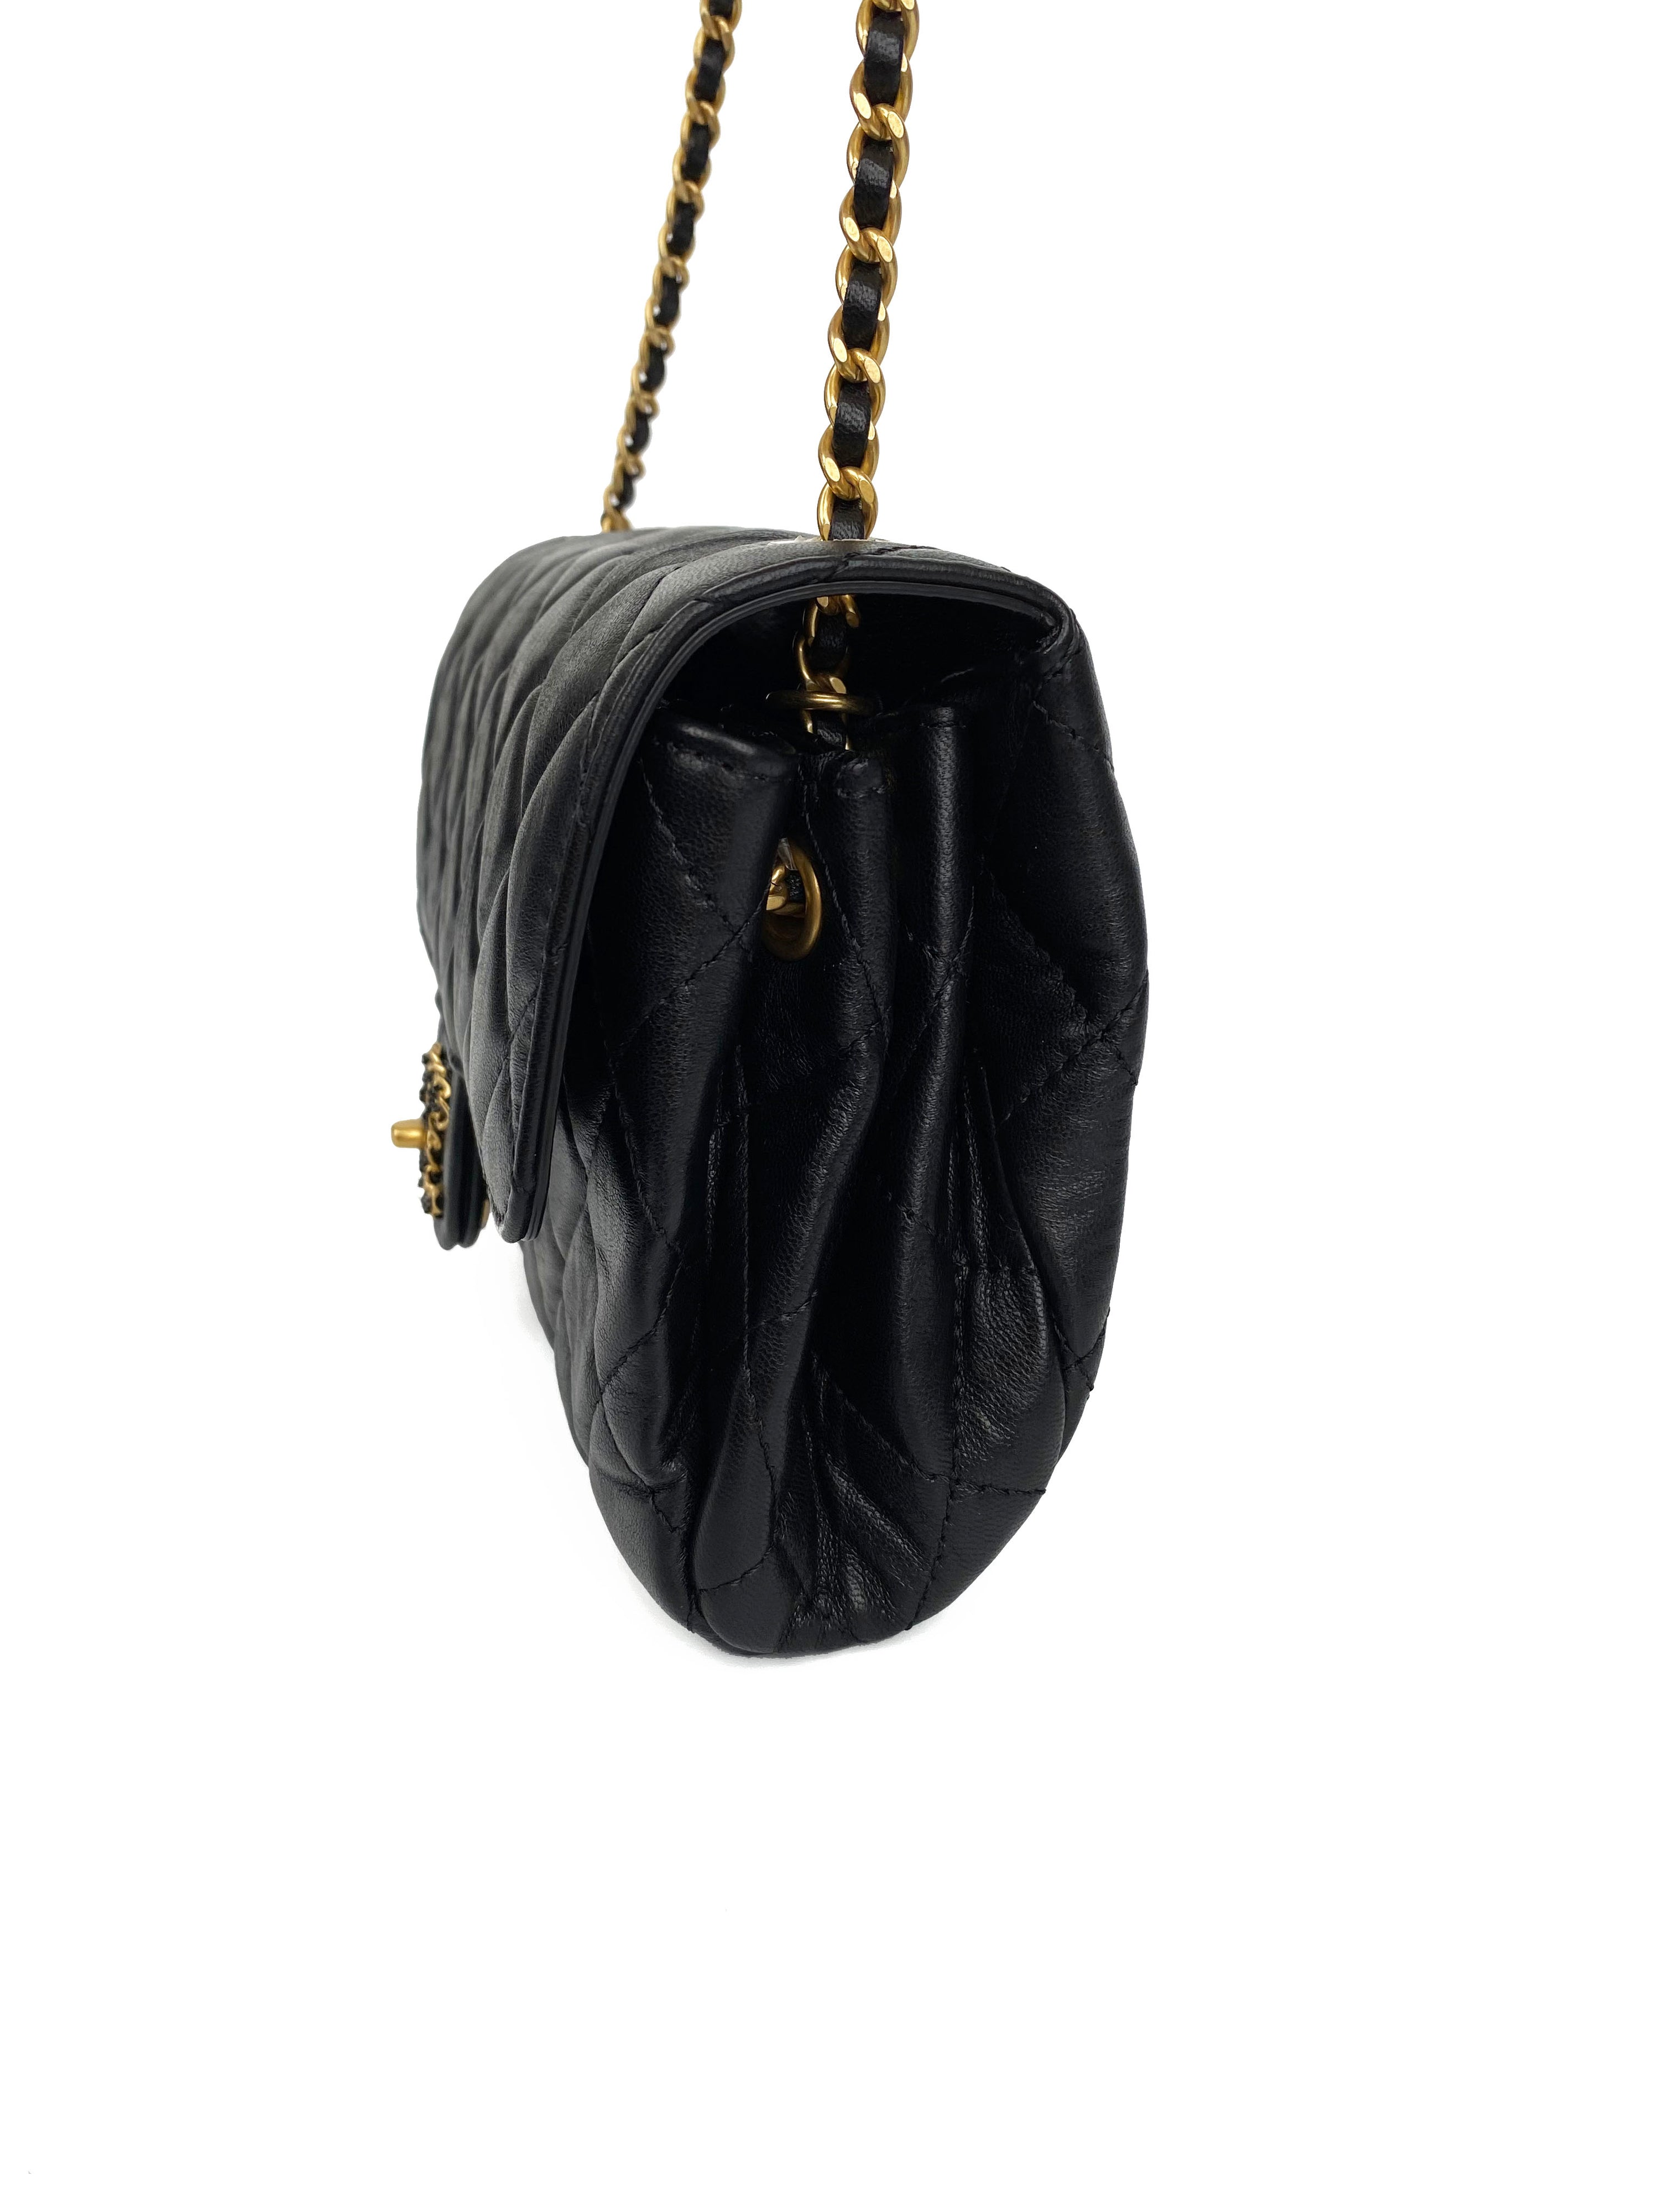 Chanel Mini Black 19 Bag